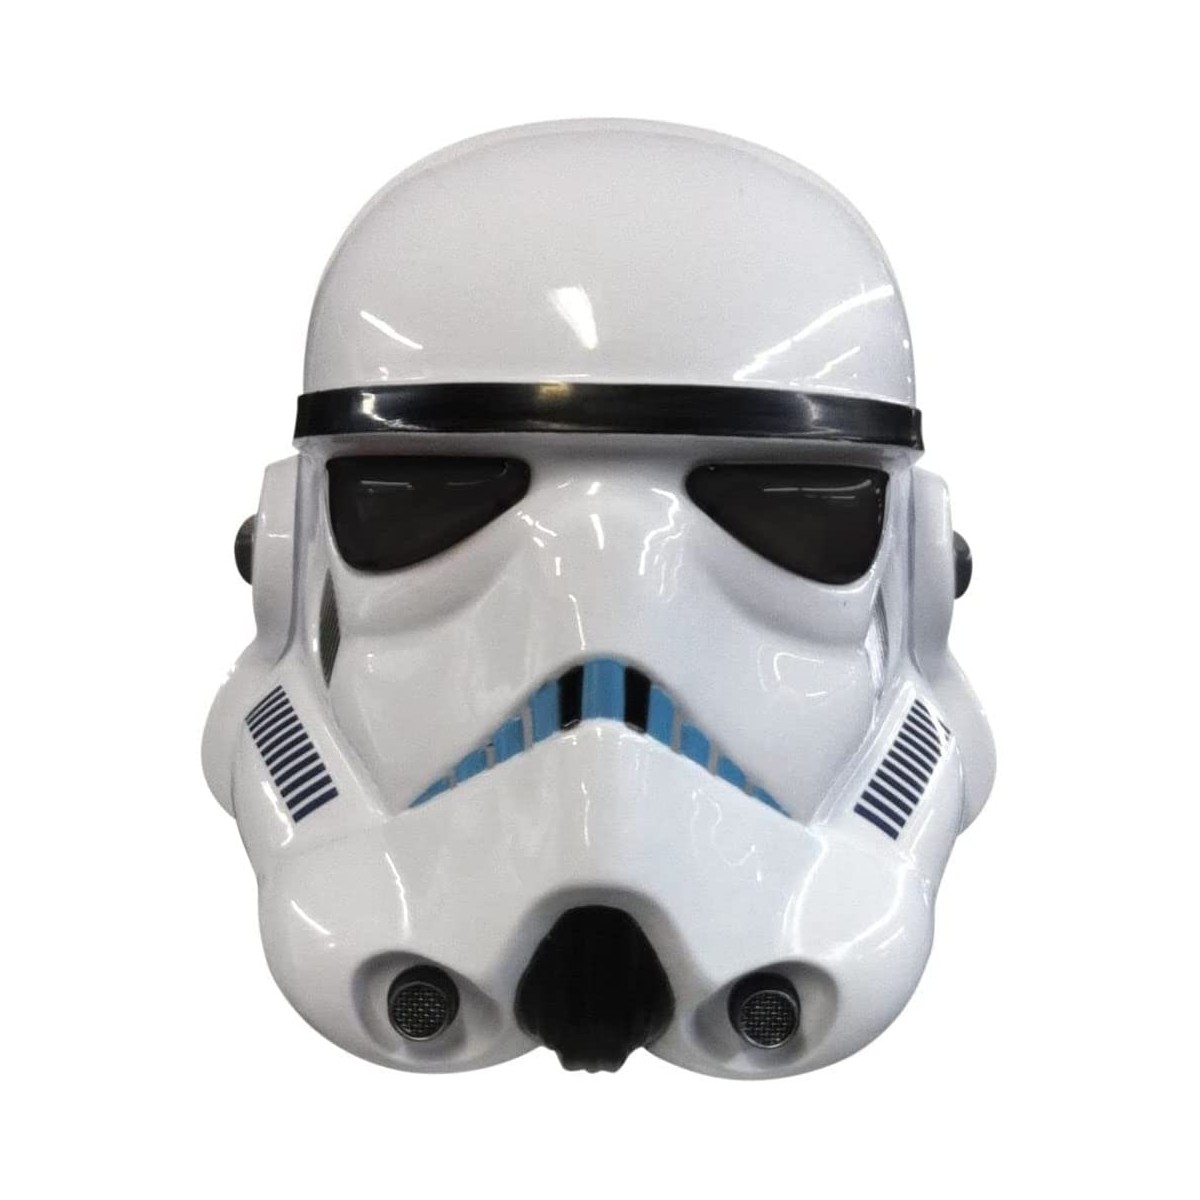 Maschera integrale Star Wars Storm Trooper, in vinile, per adulti